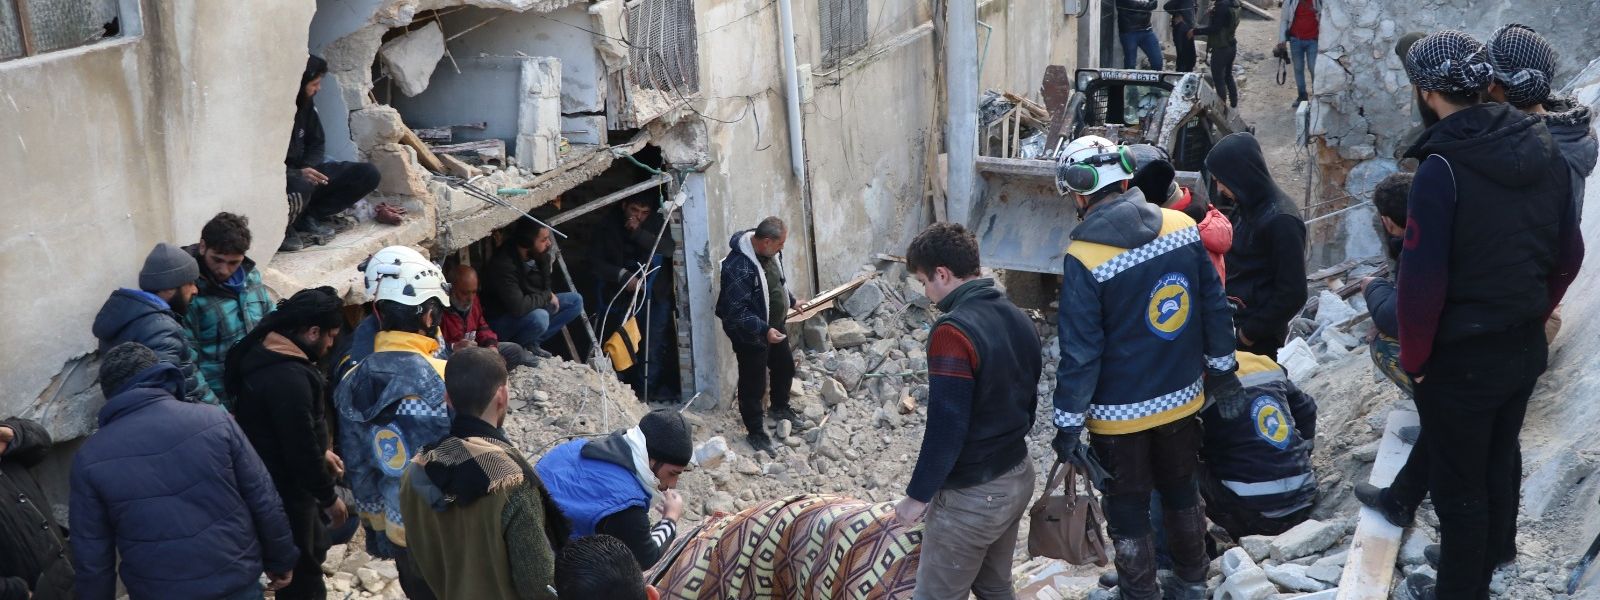 Turkiye-Syria Quake: Death toll passes 7,900